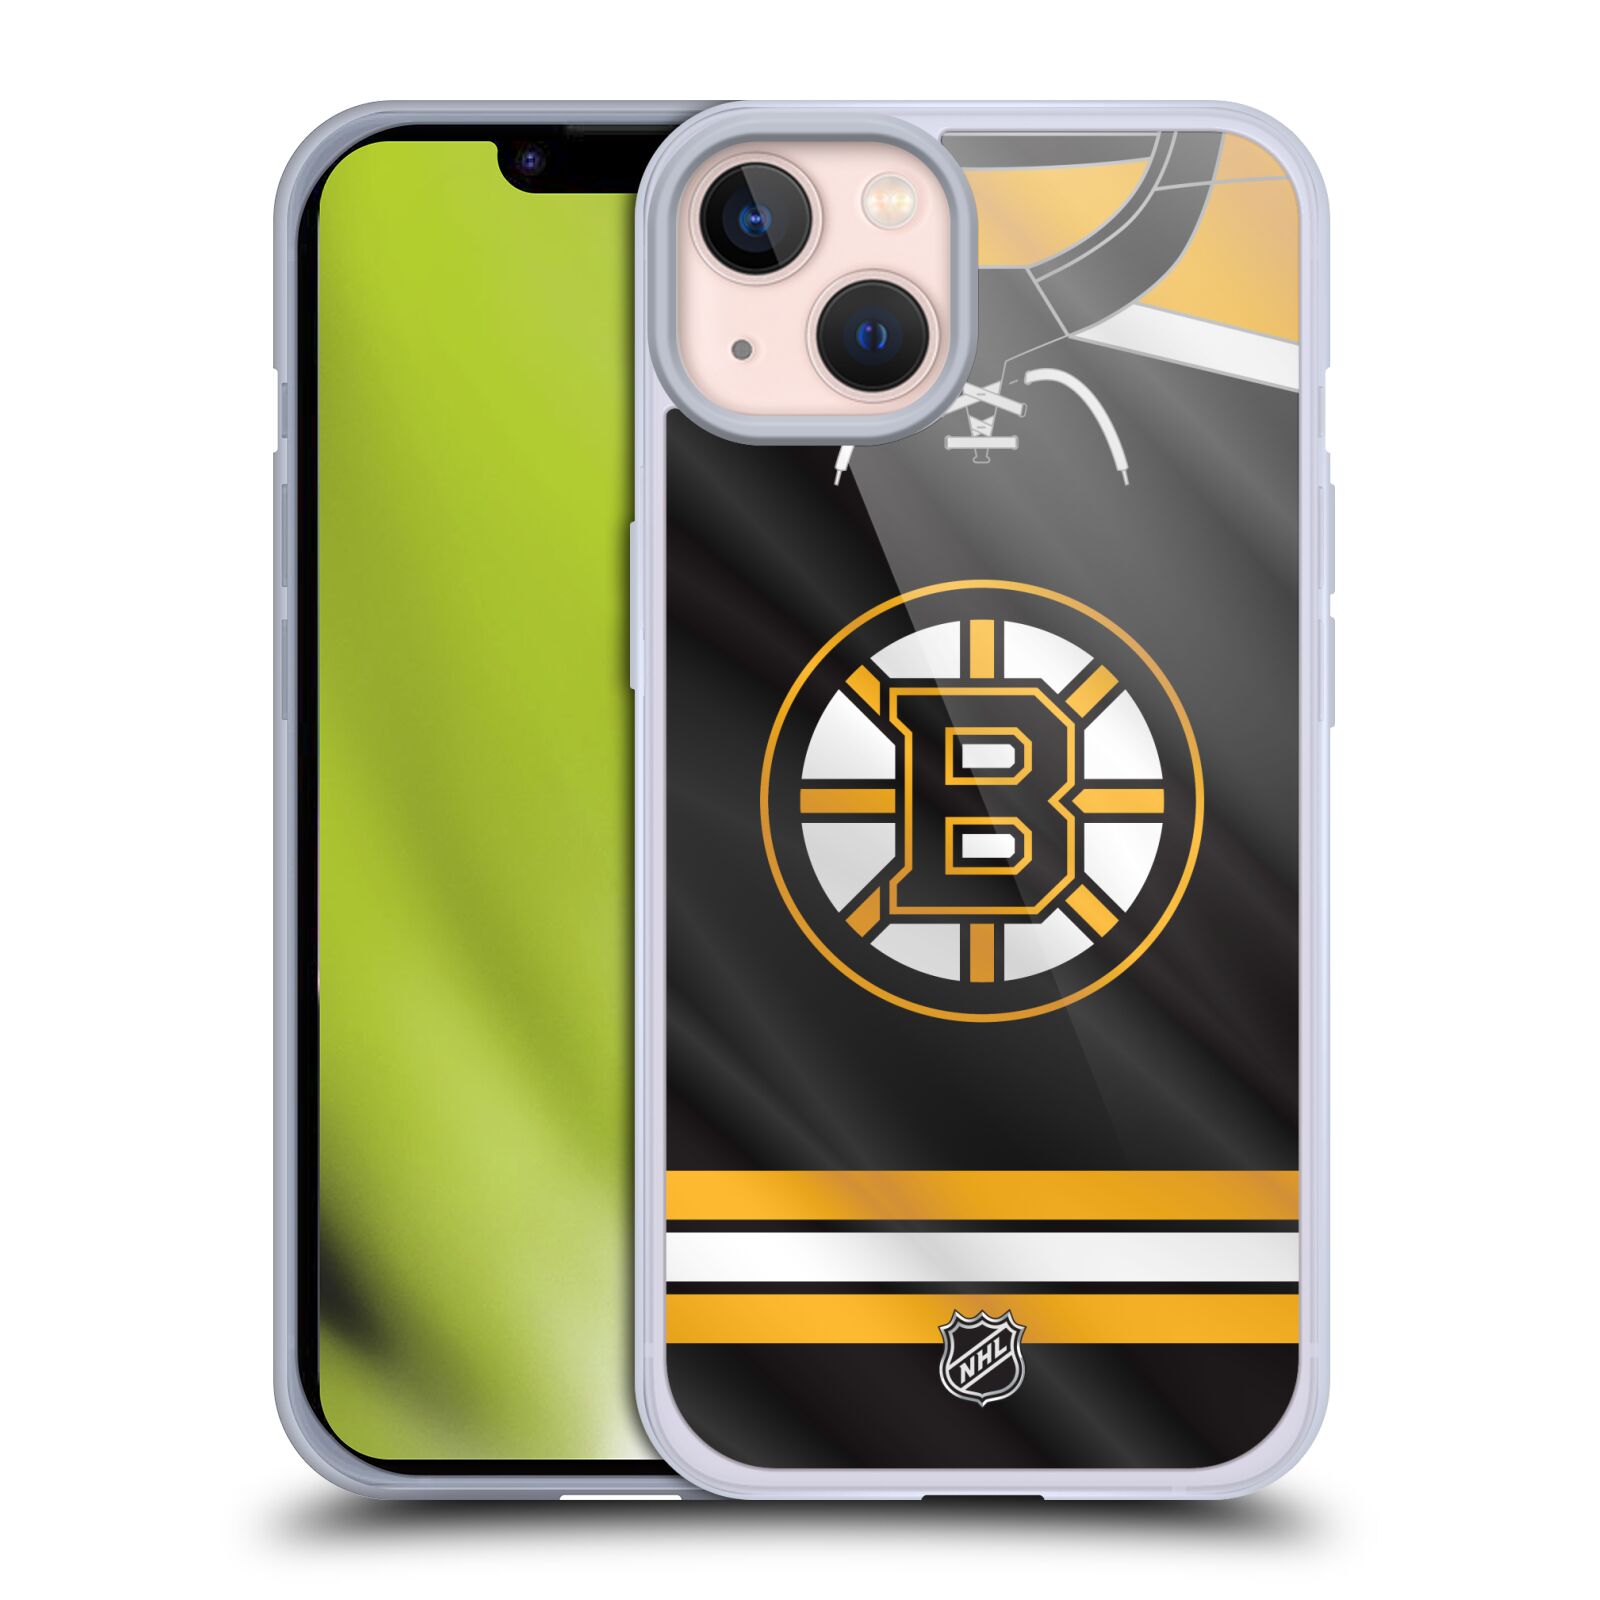 Silikonové pouzdro na mobil Apple iPhone 13 - NHL - Dres Boston Bruins - AKCE (Silikonový kryt, obal, pouzdro na mobilní telefon Apple iPhone 13 s licencovaným motivem NHL - Dres Boston Bruins)